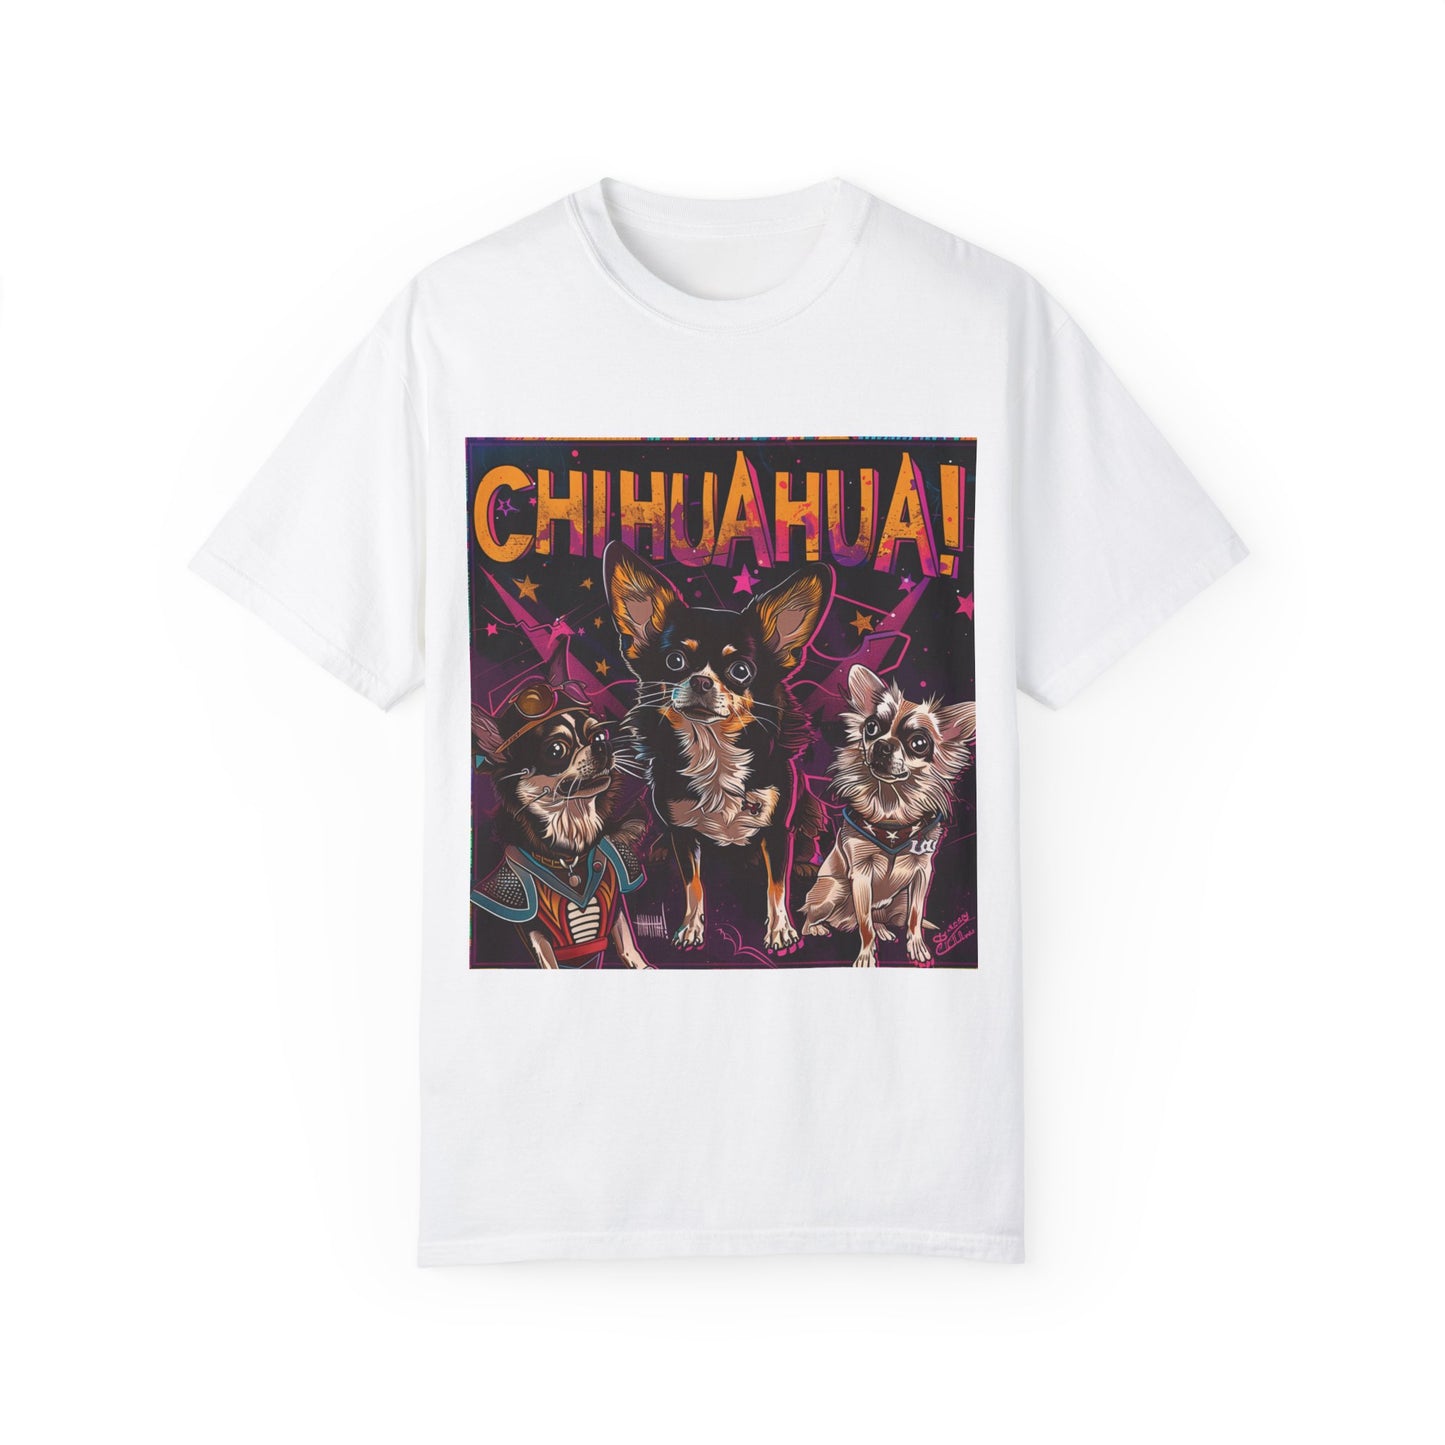 Chihuahua! Graphic Tee